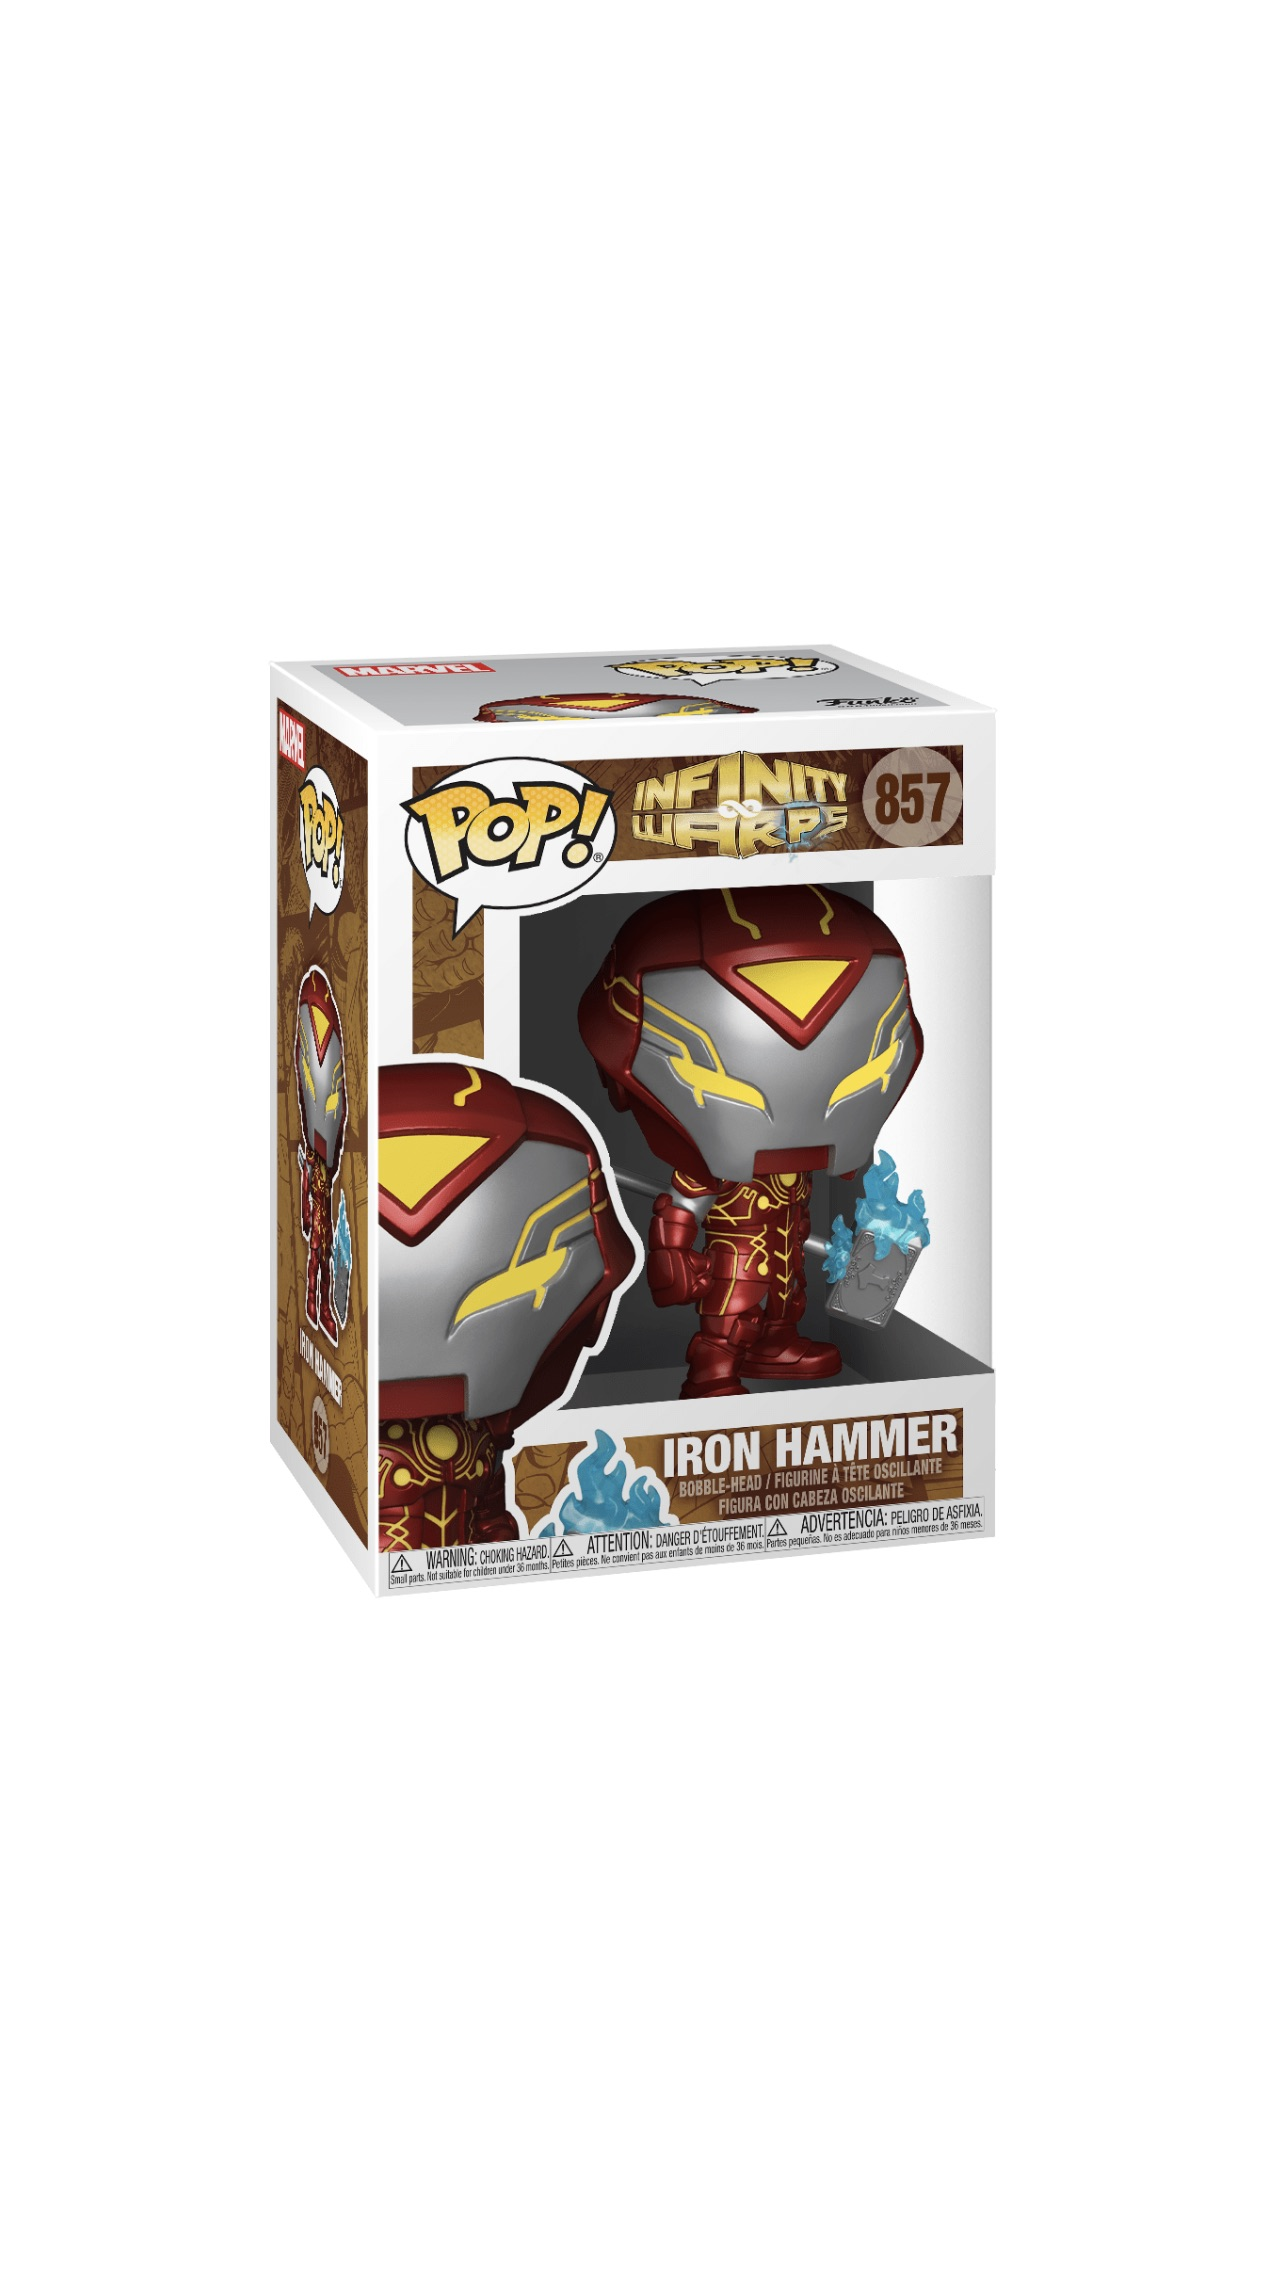 POP! Marvel Infinity Warps Iron Hammer #857